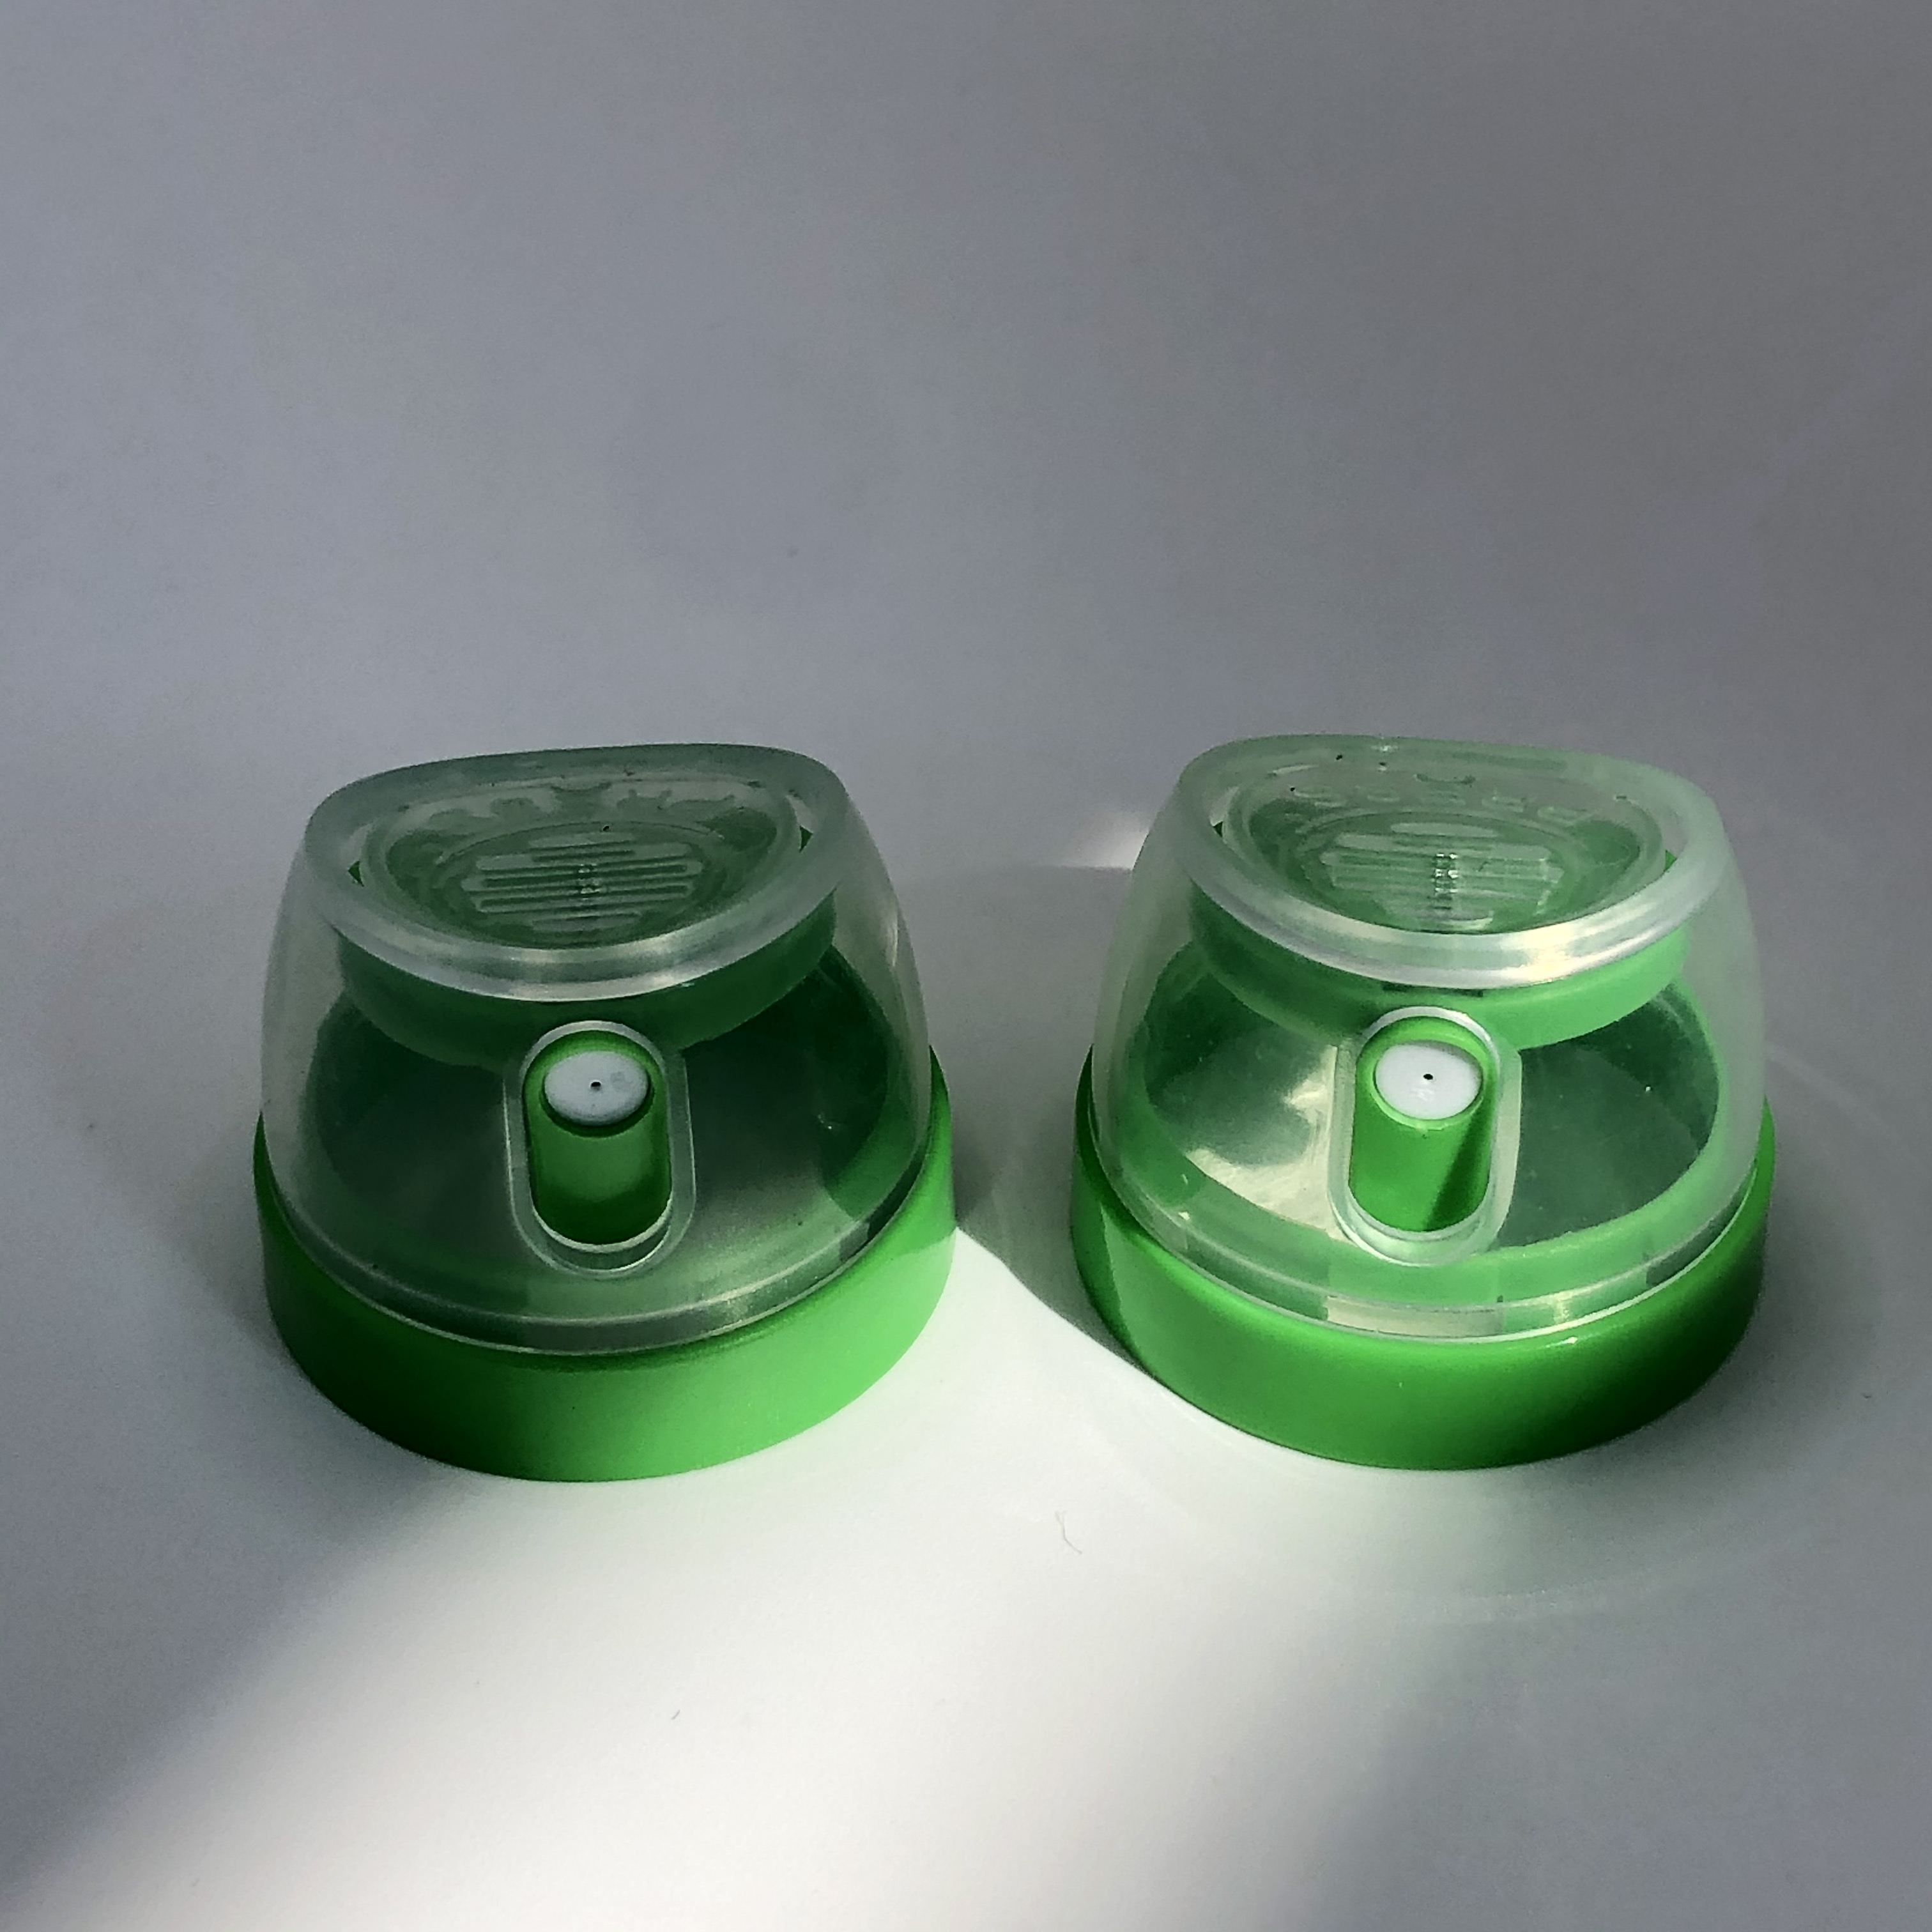 Gıda Saflı Aerosol Sprey Kapağı-BPA içermeyen, 35mm boyutu